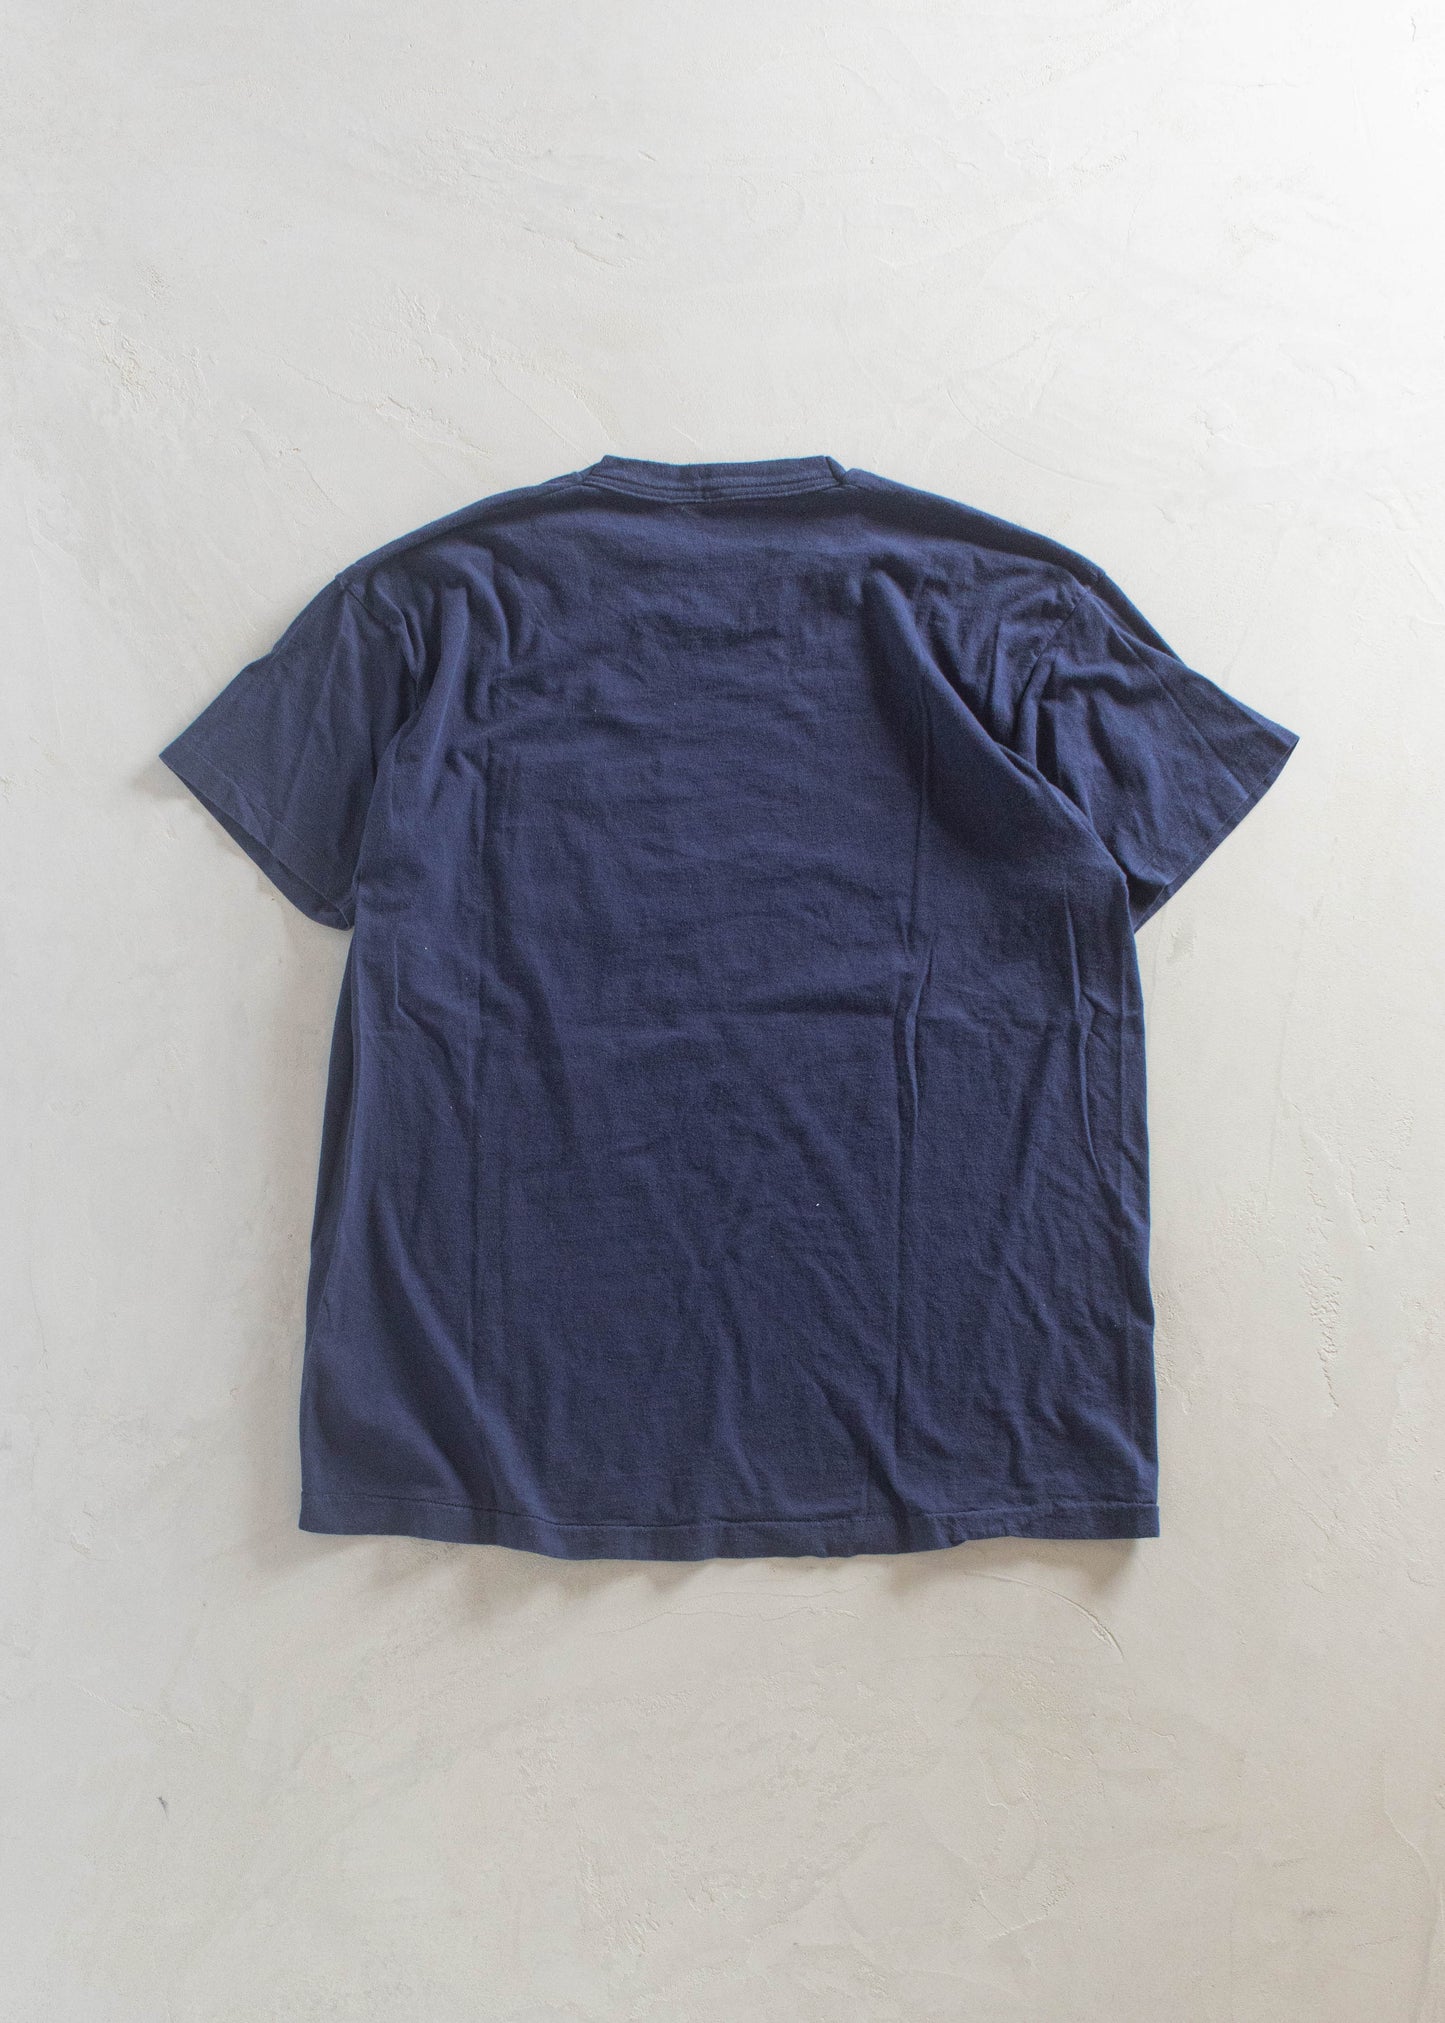 1980s Selvedge Pocket T-Shirt Size XL/2XL